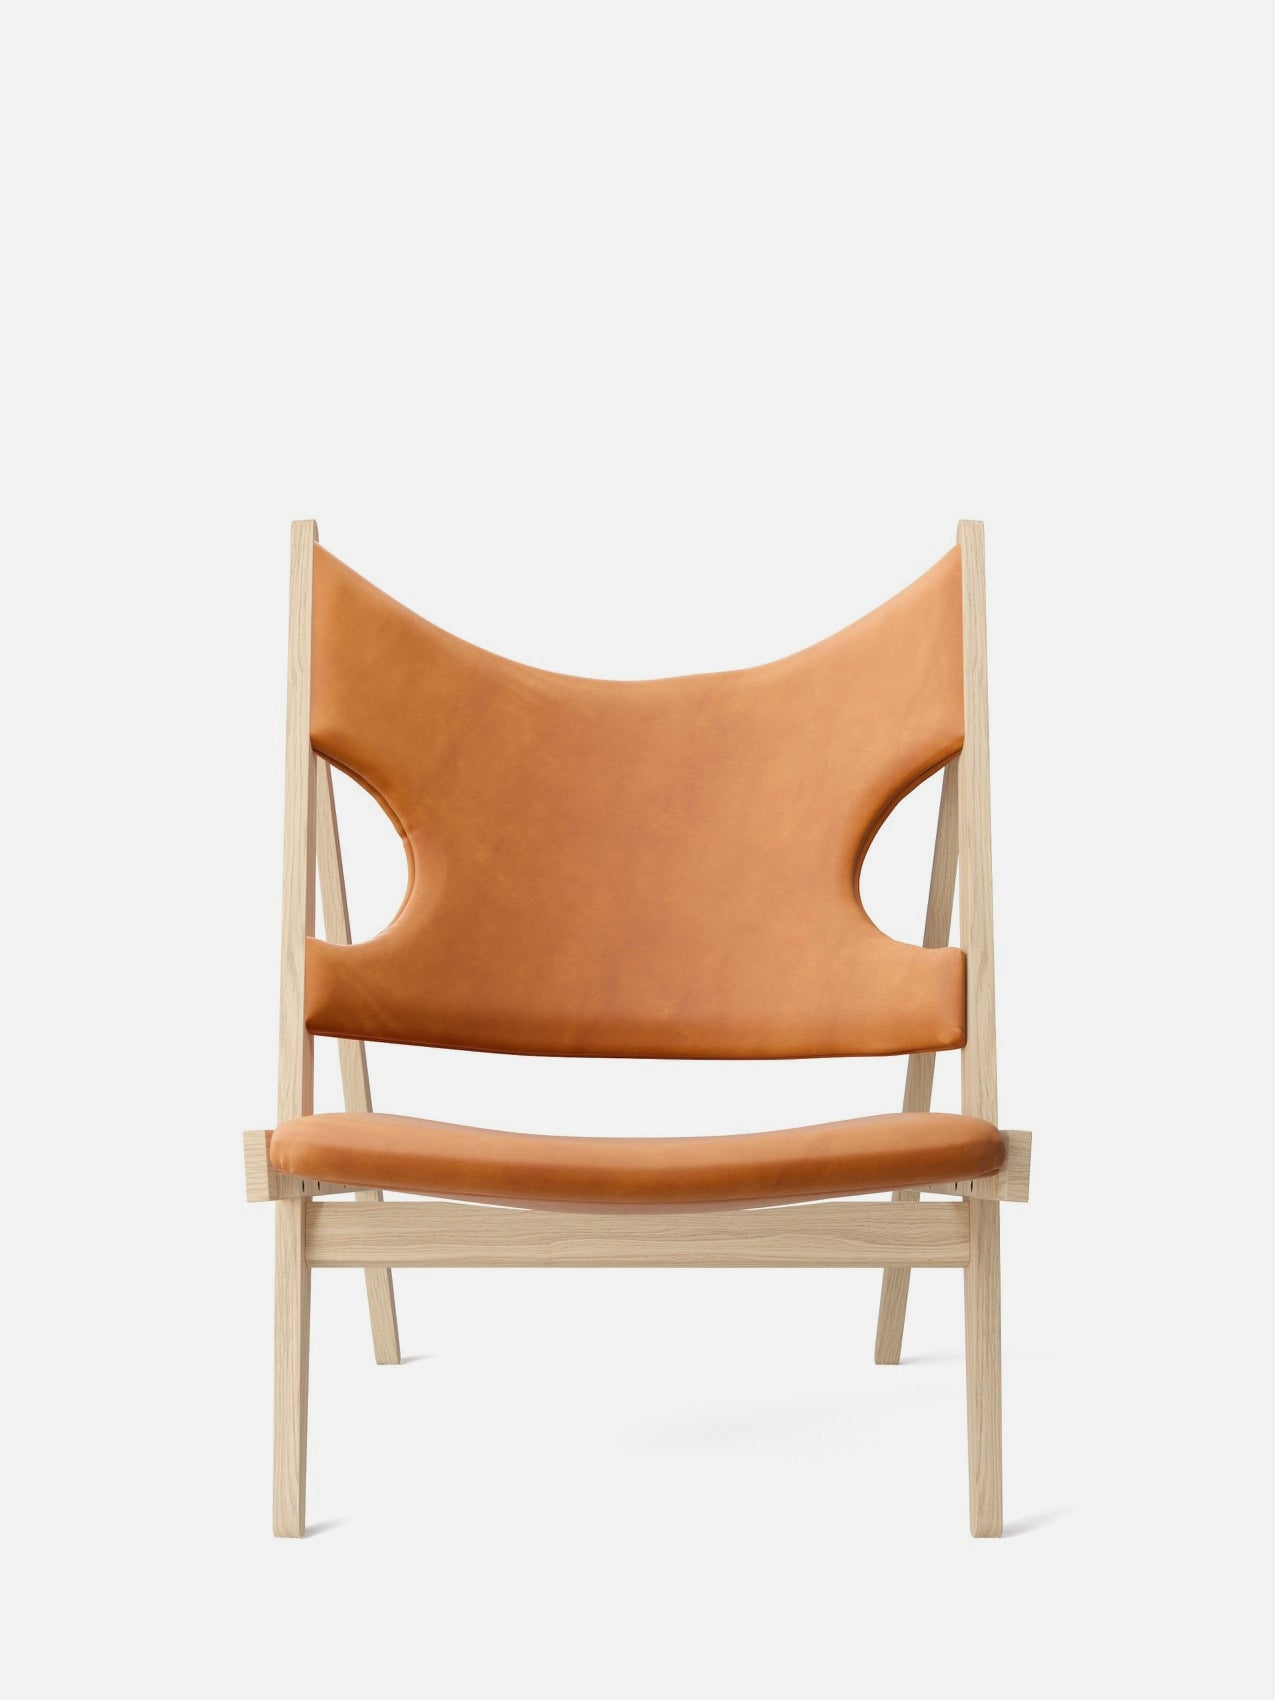 Knitting Chair-Lounge Chair-Ib Kofod-Larsen-Lounge Height (Seat 11.8in H)/Natural Oak-Cognac/Dunes-menu-minimalist-modern-danish-design-home-decor